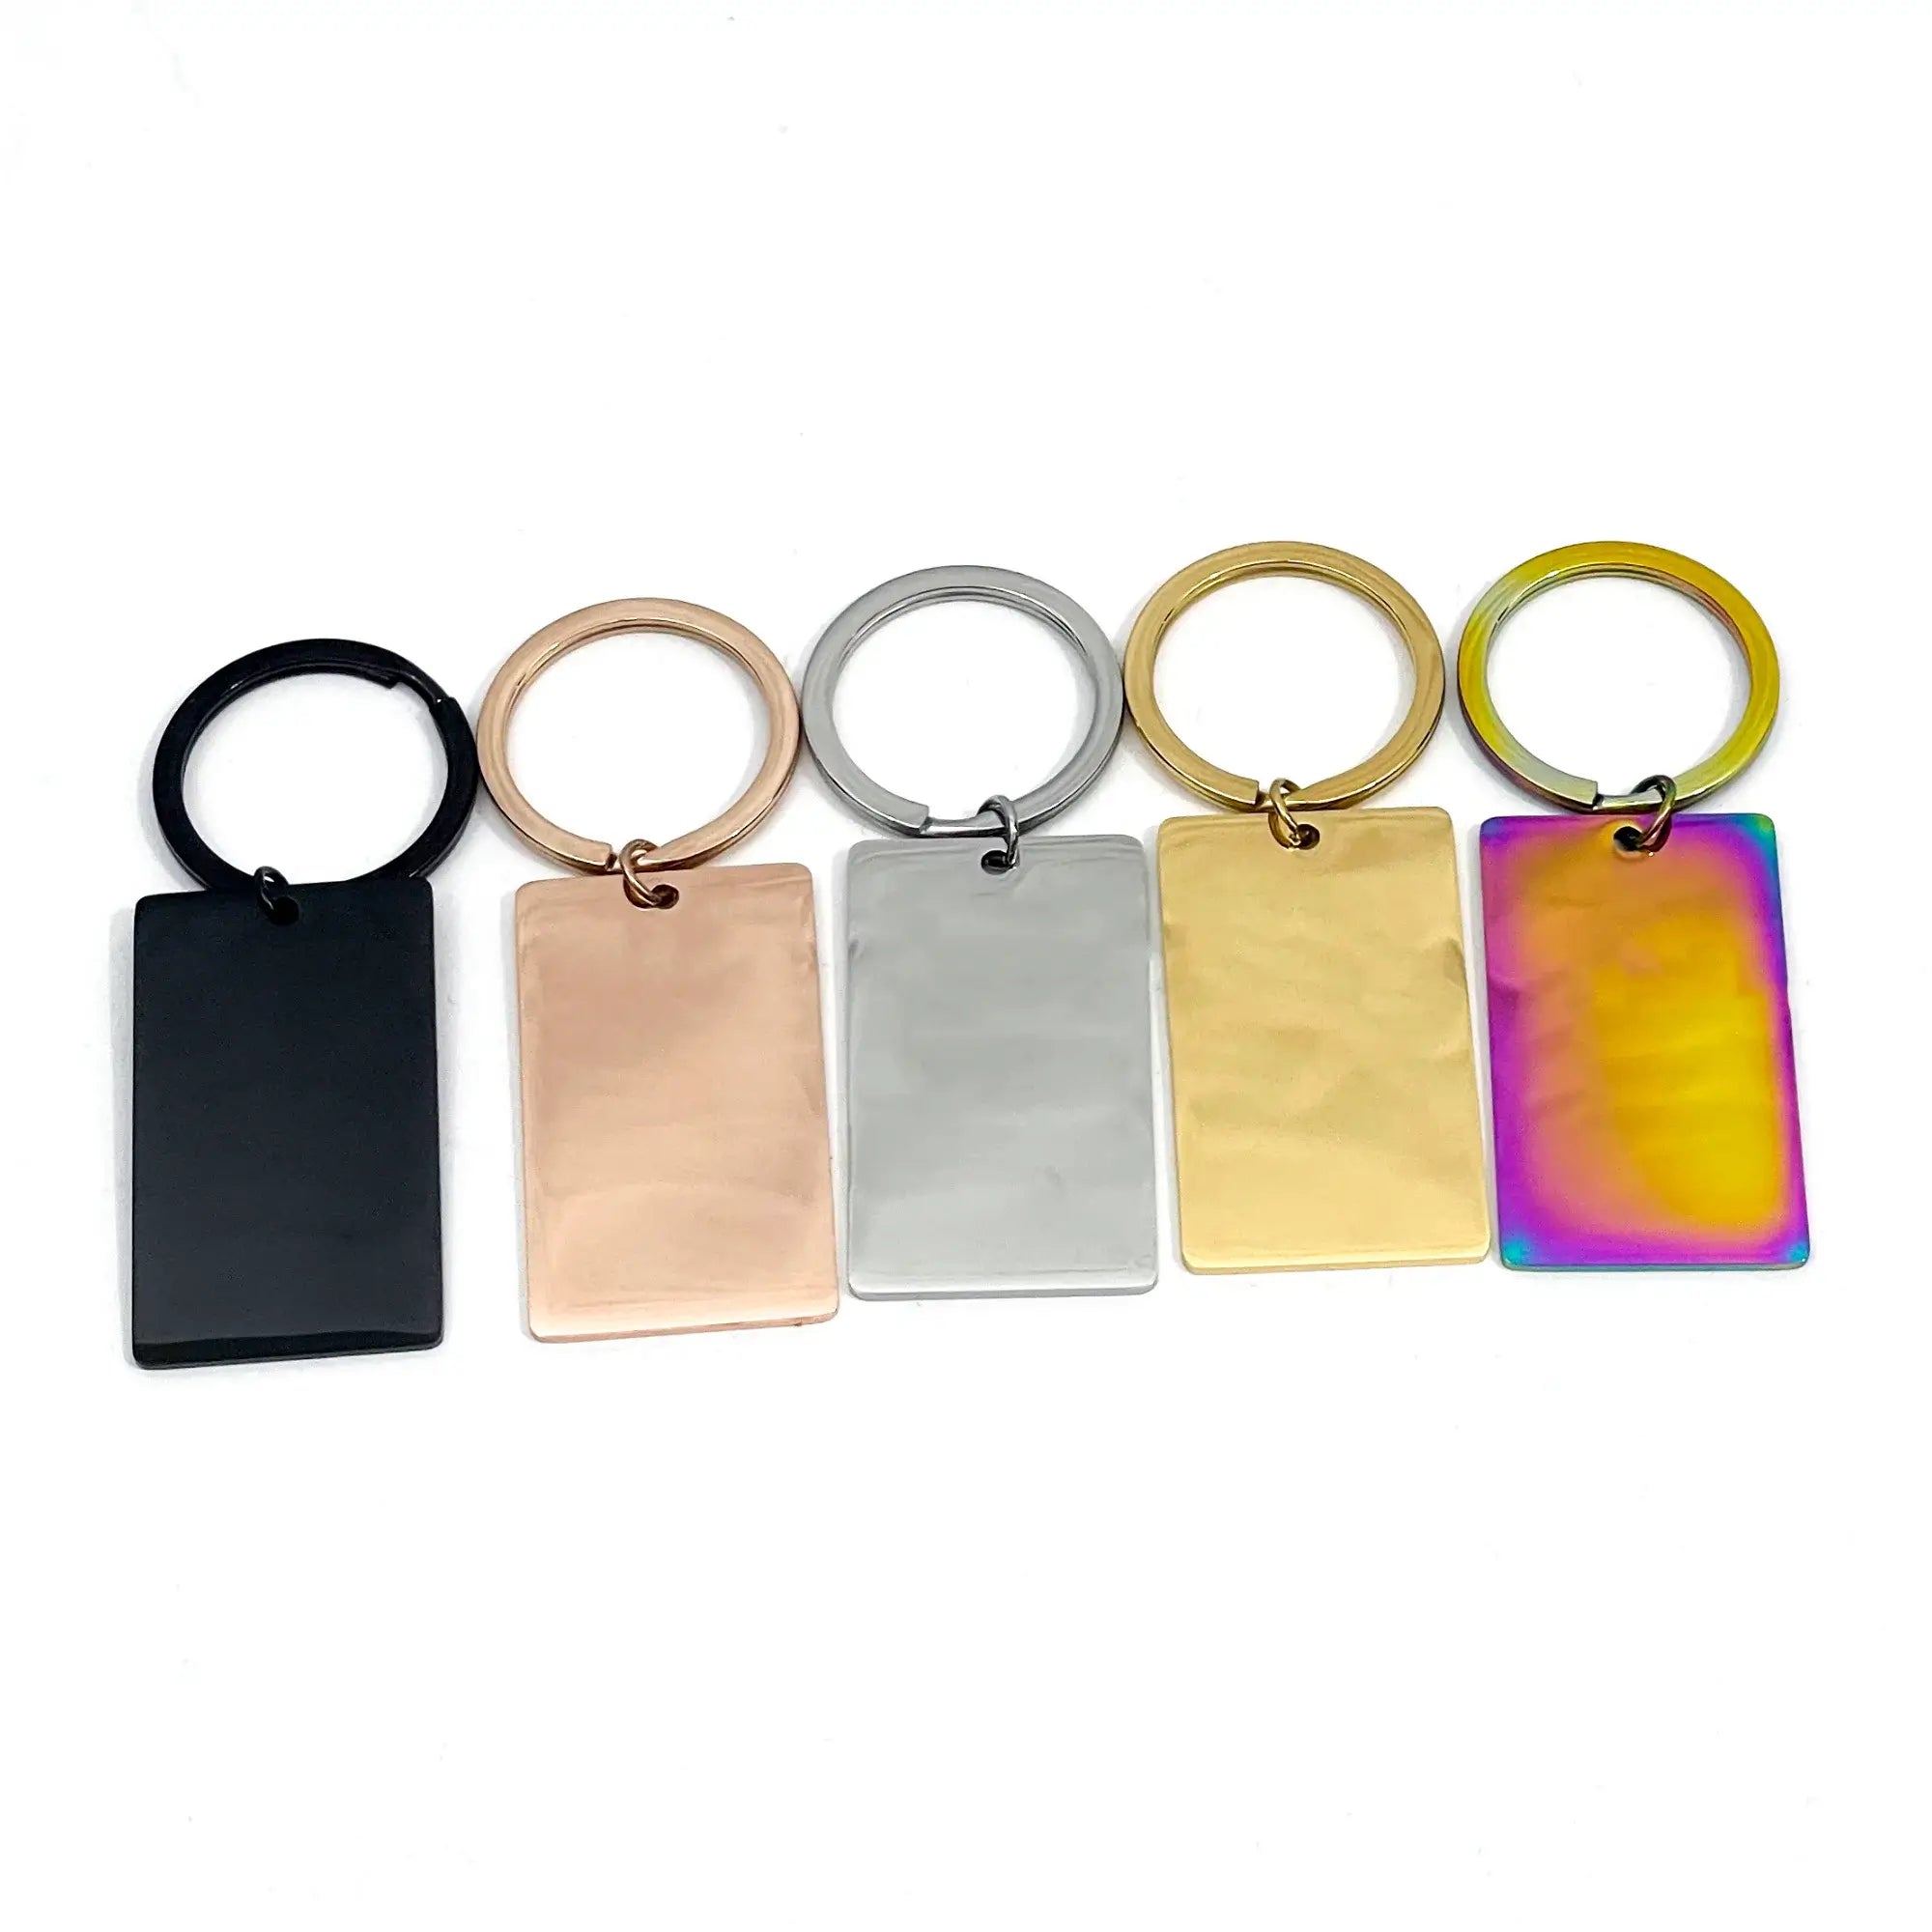 Personalized keychain, gifts, music keychain